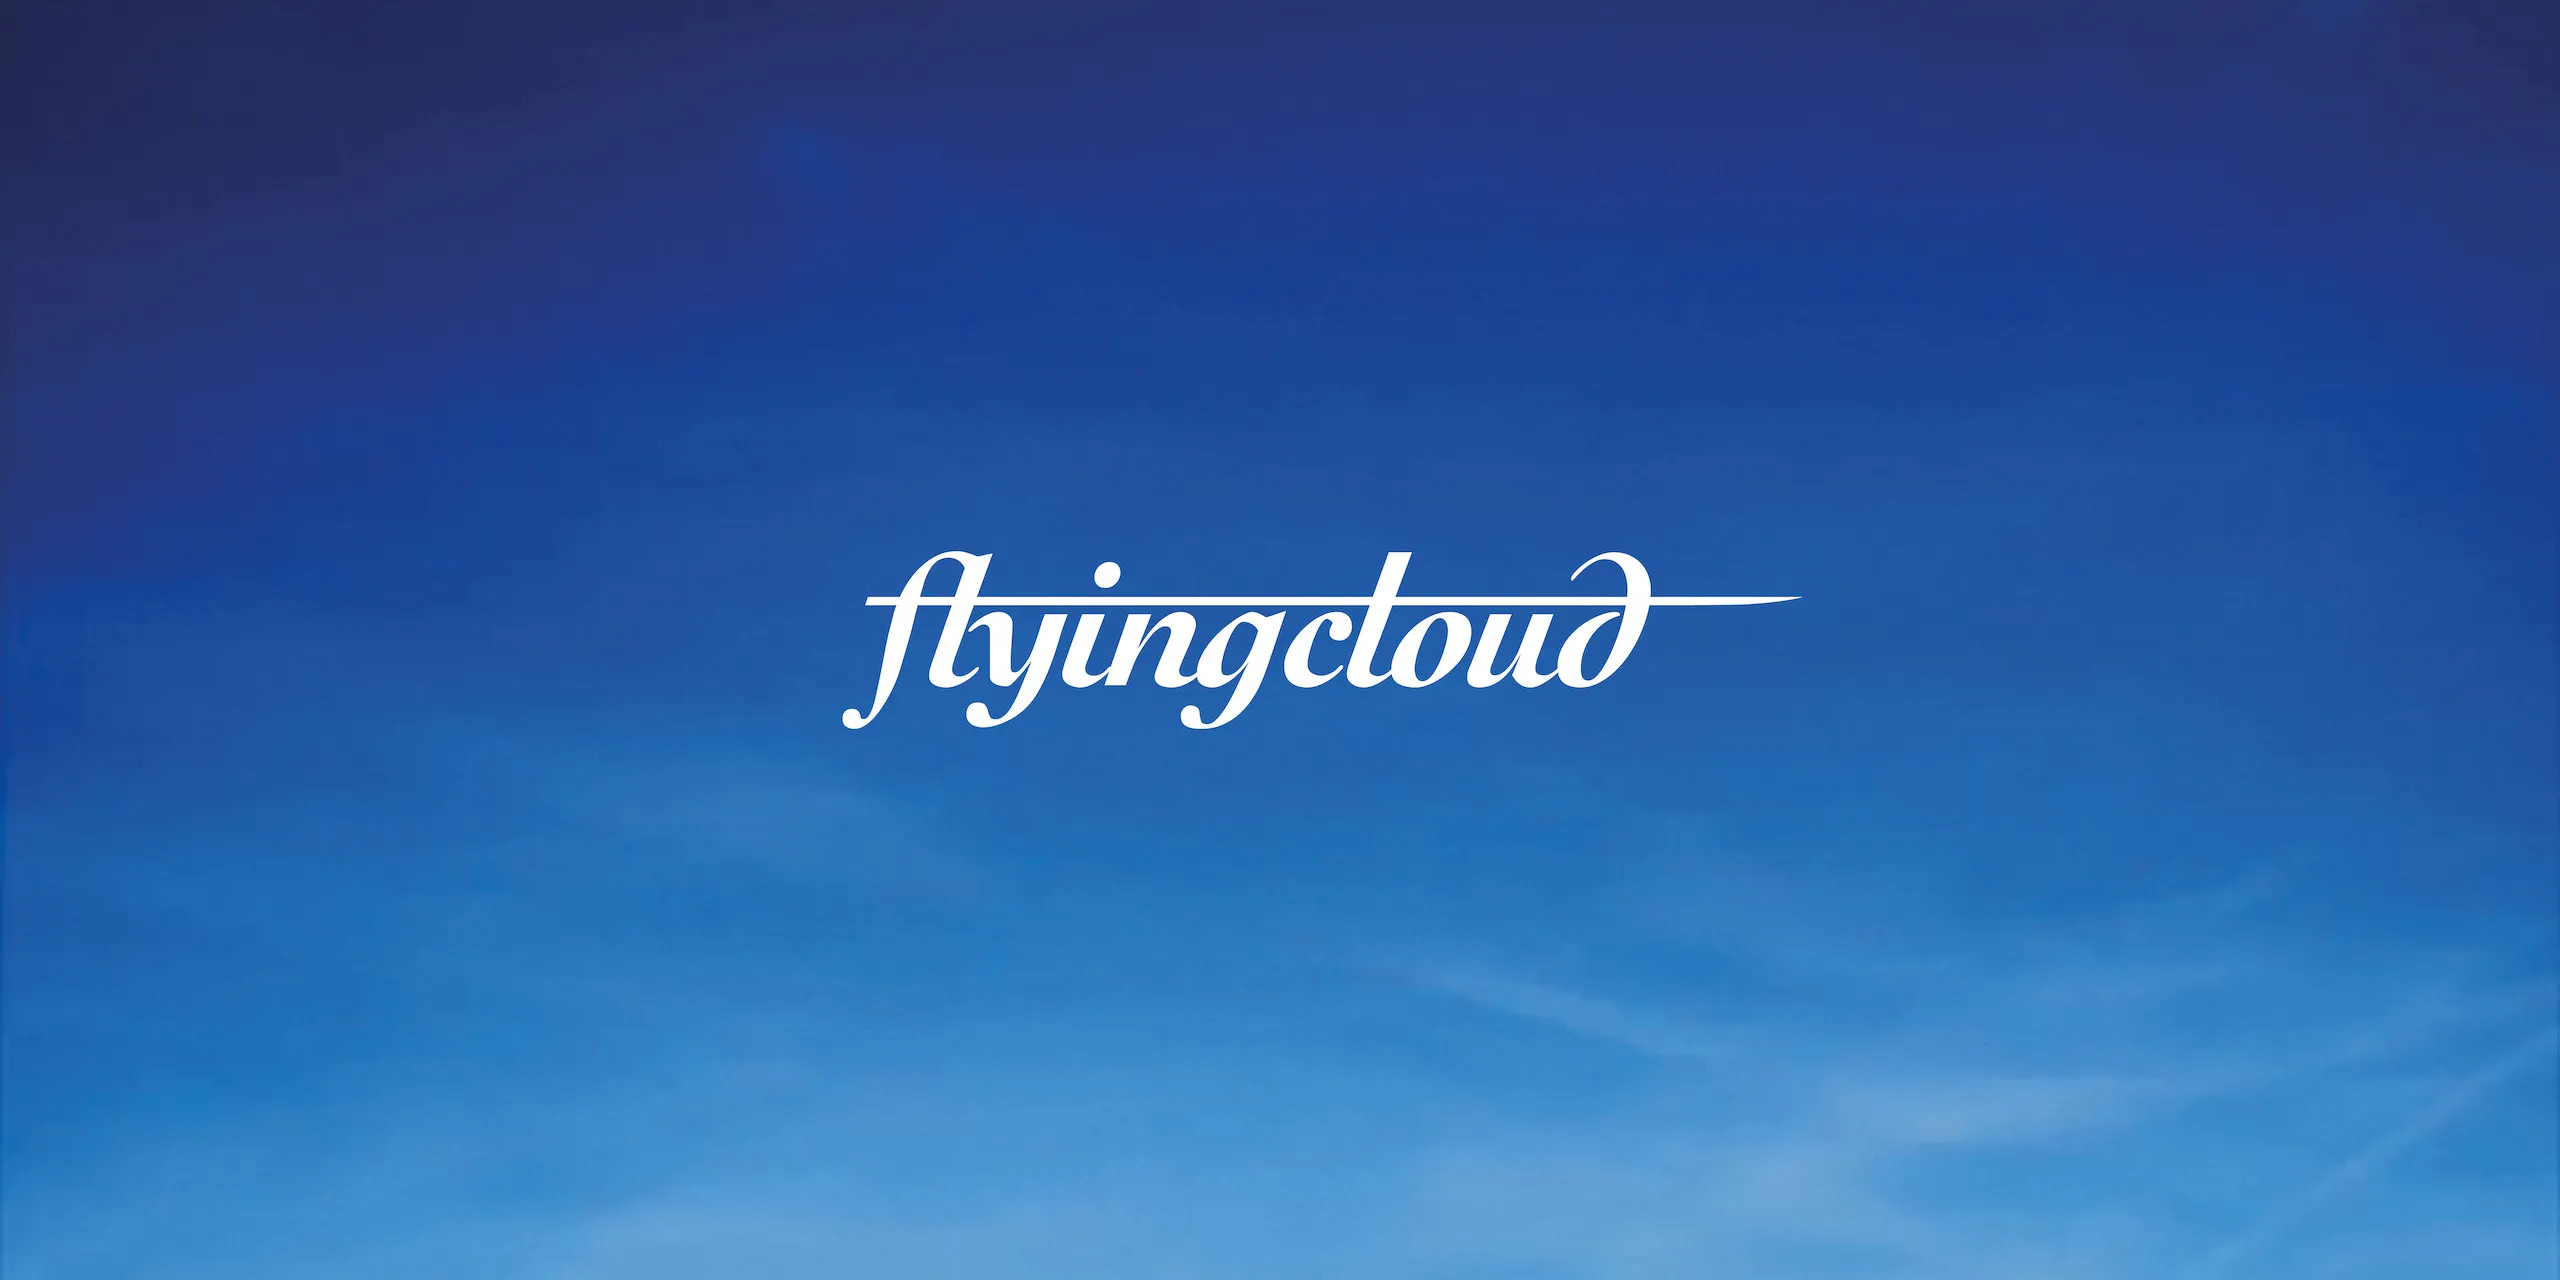 Flying Cloud wordmark against a blue sky